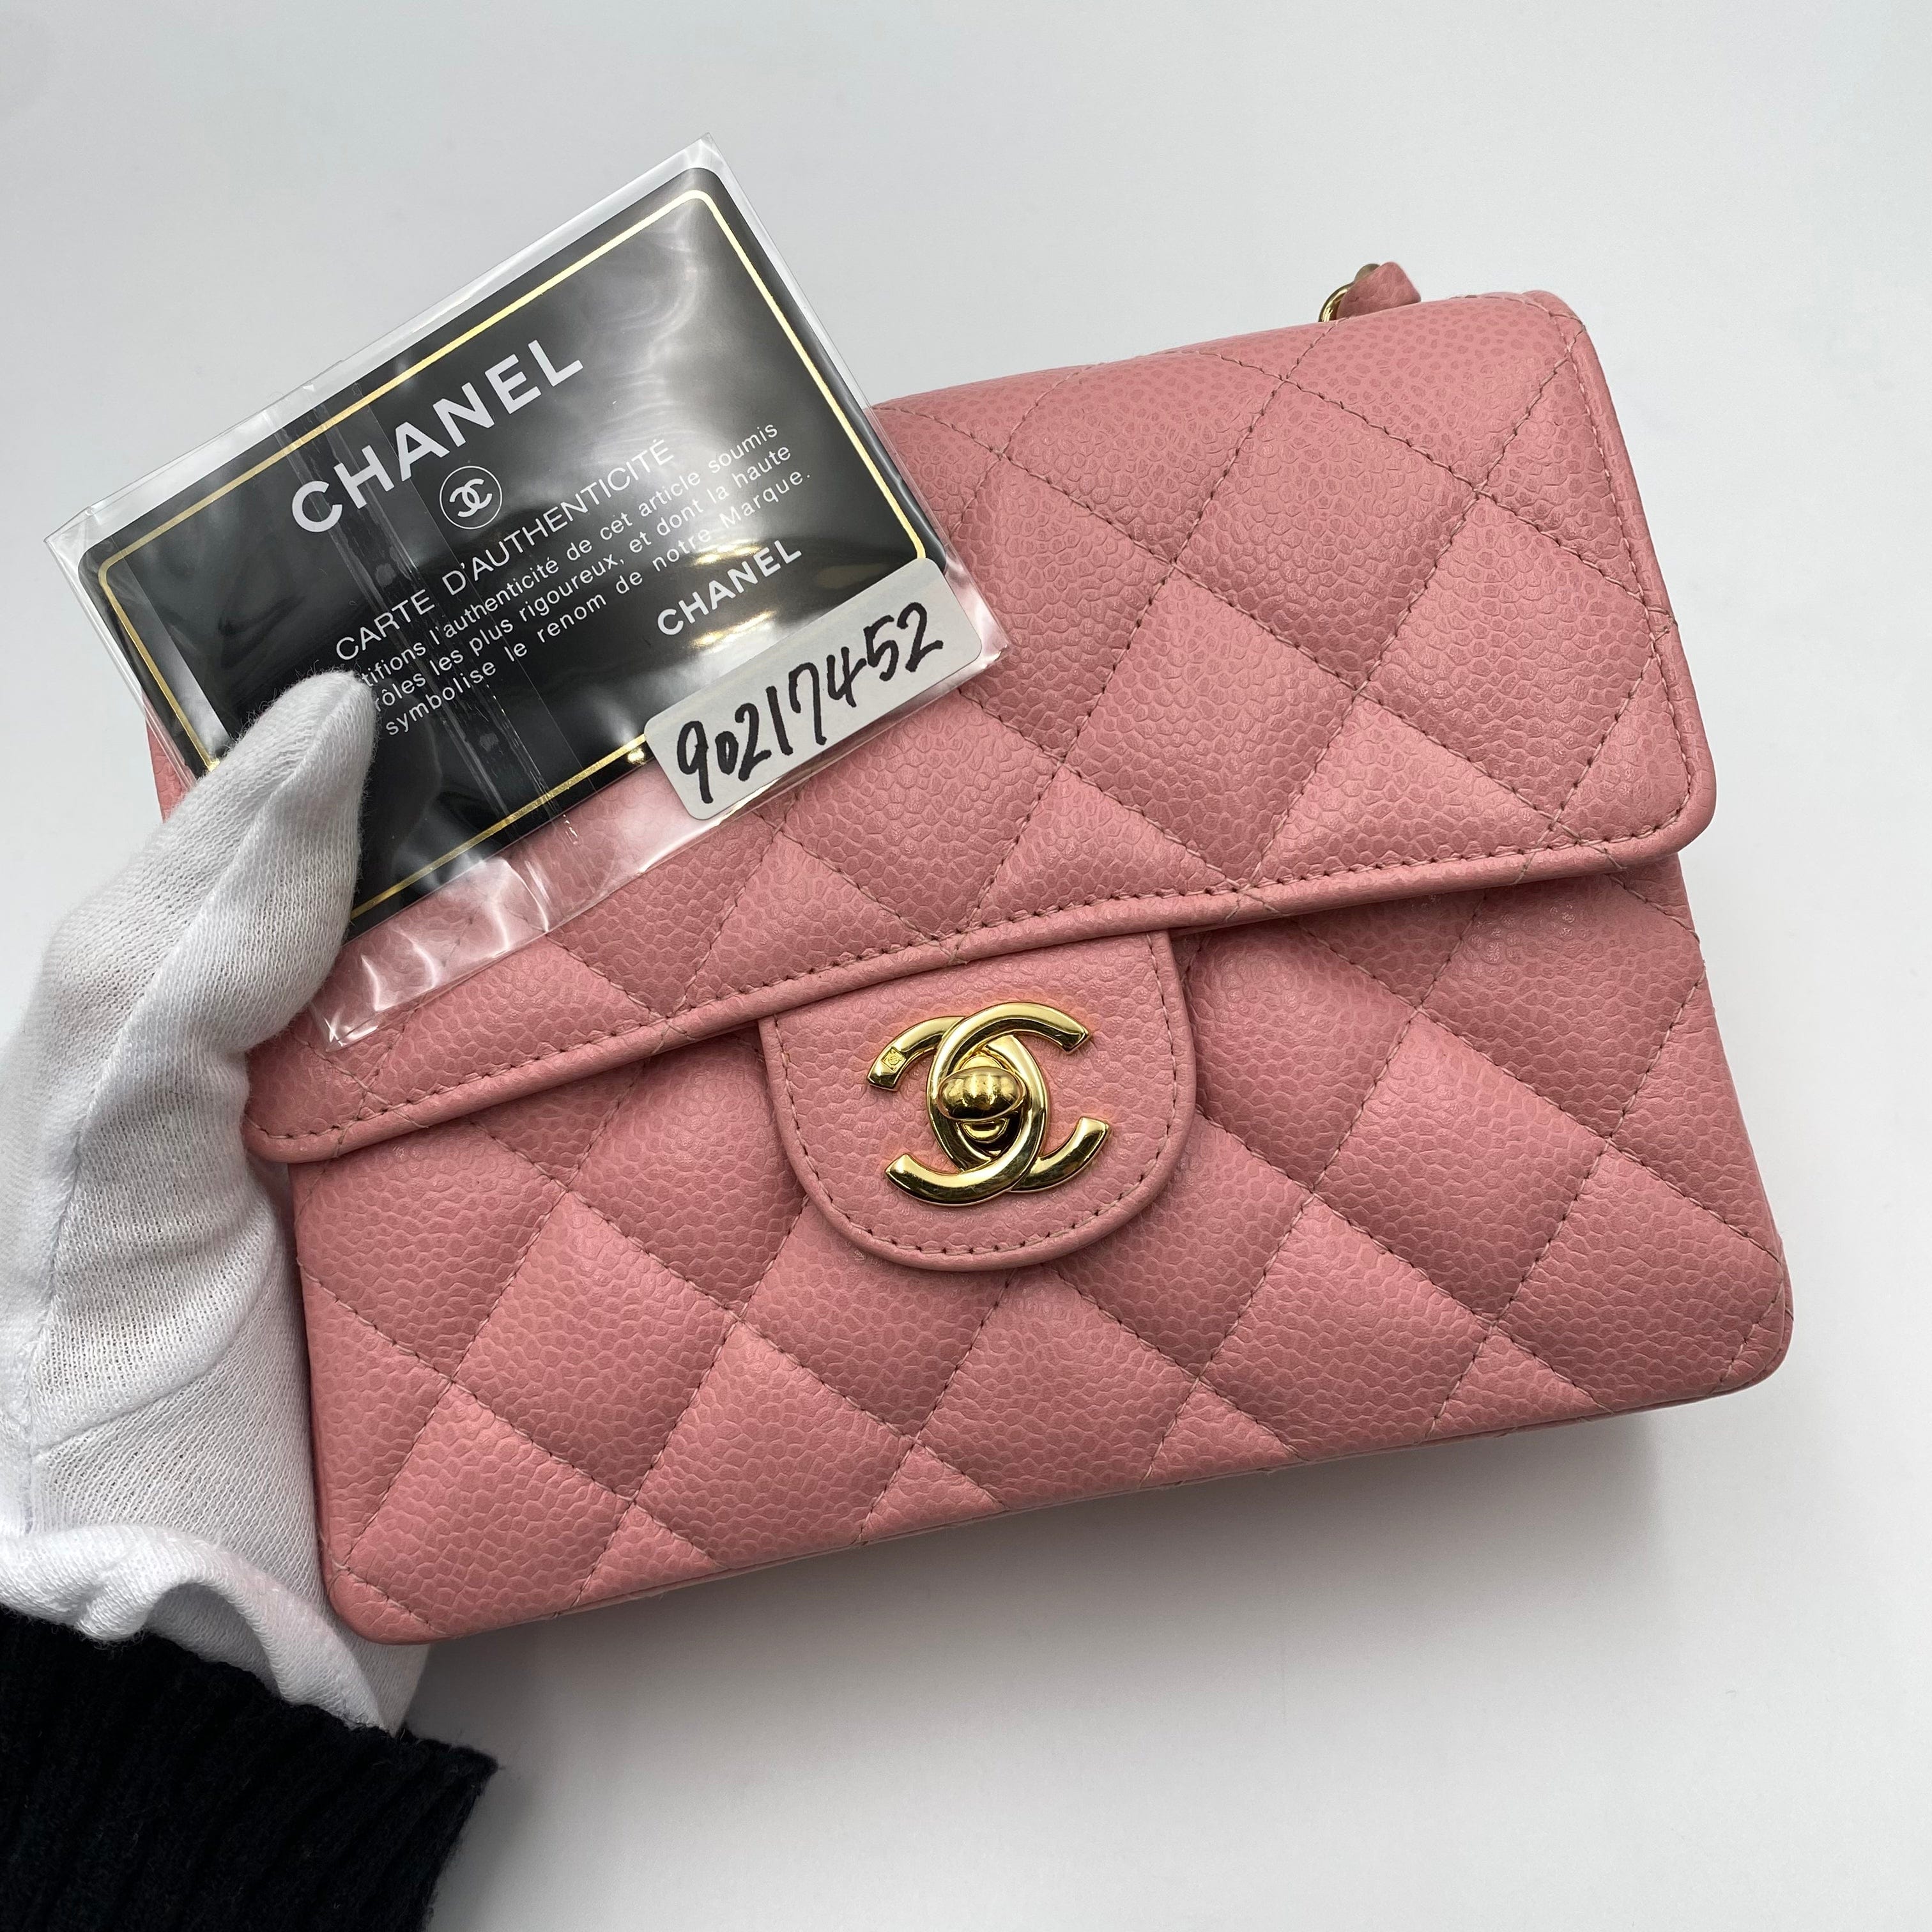 Chanel CHANEL VINTAGE MINI SQUARE 17 CHAIN SHOULDER BAG PINK CAVIAR SKIN 90217452